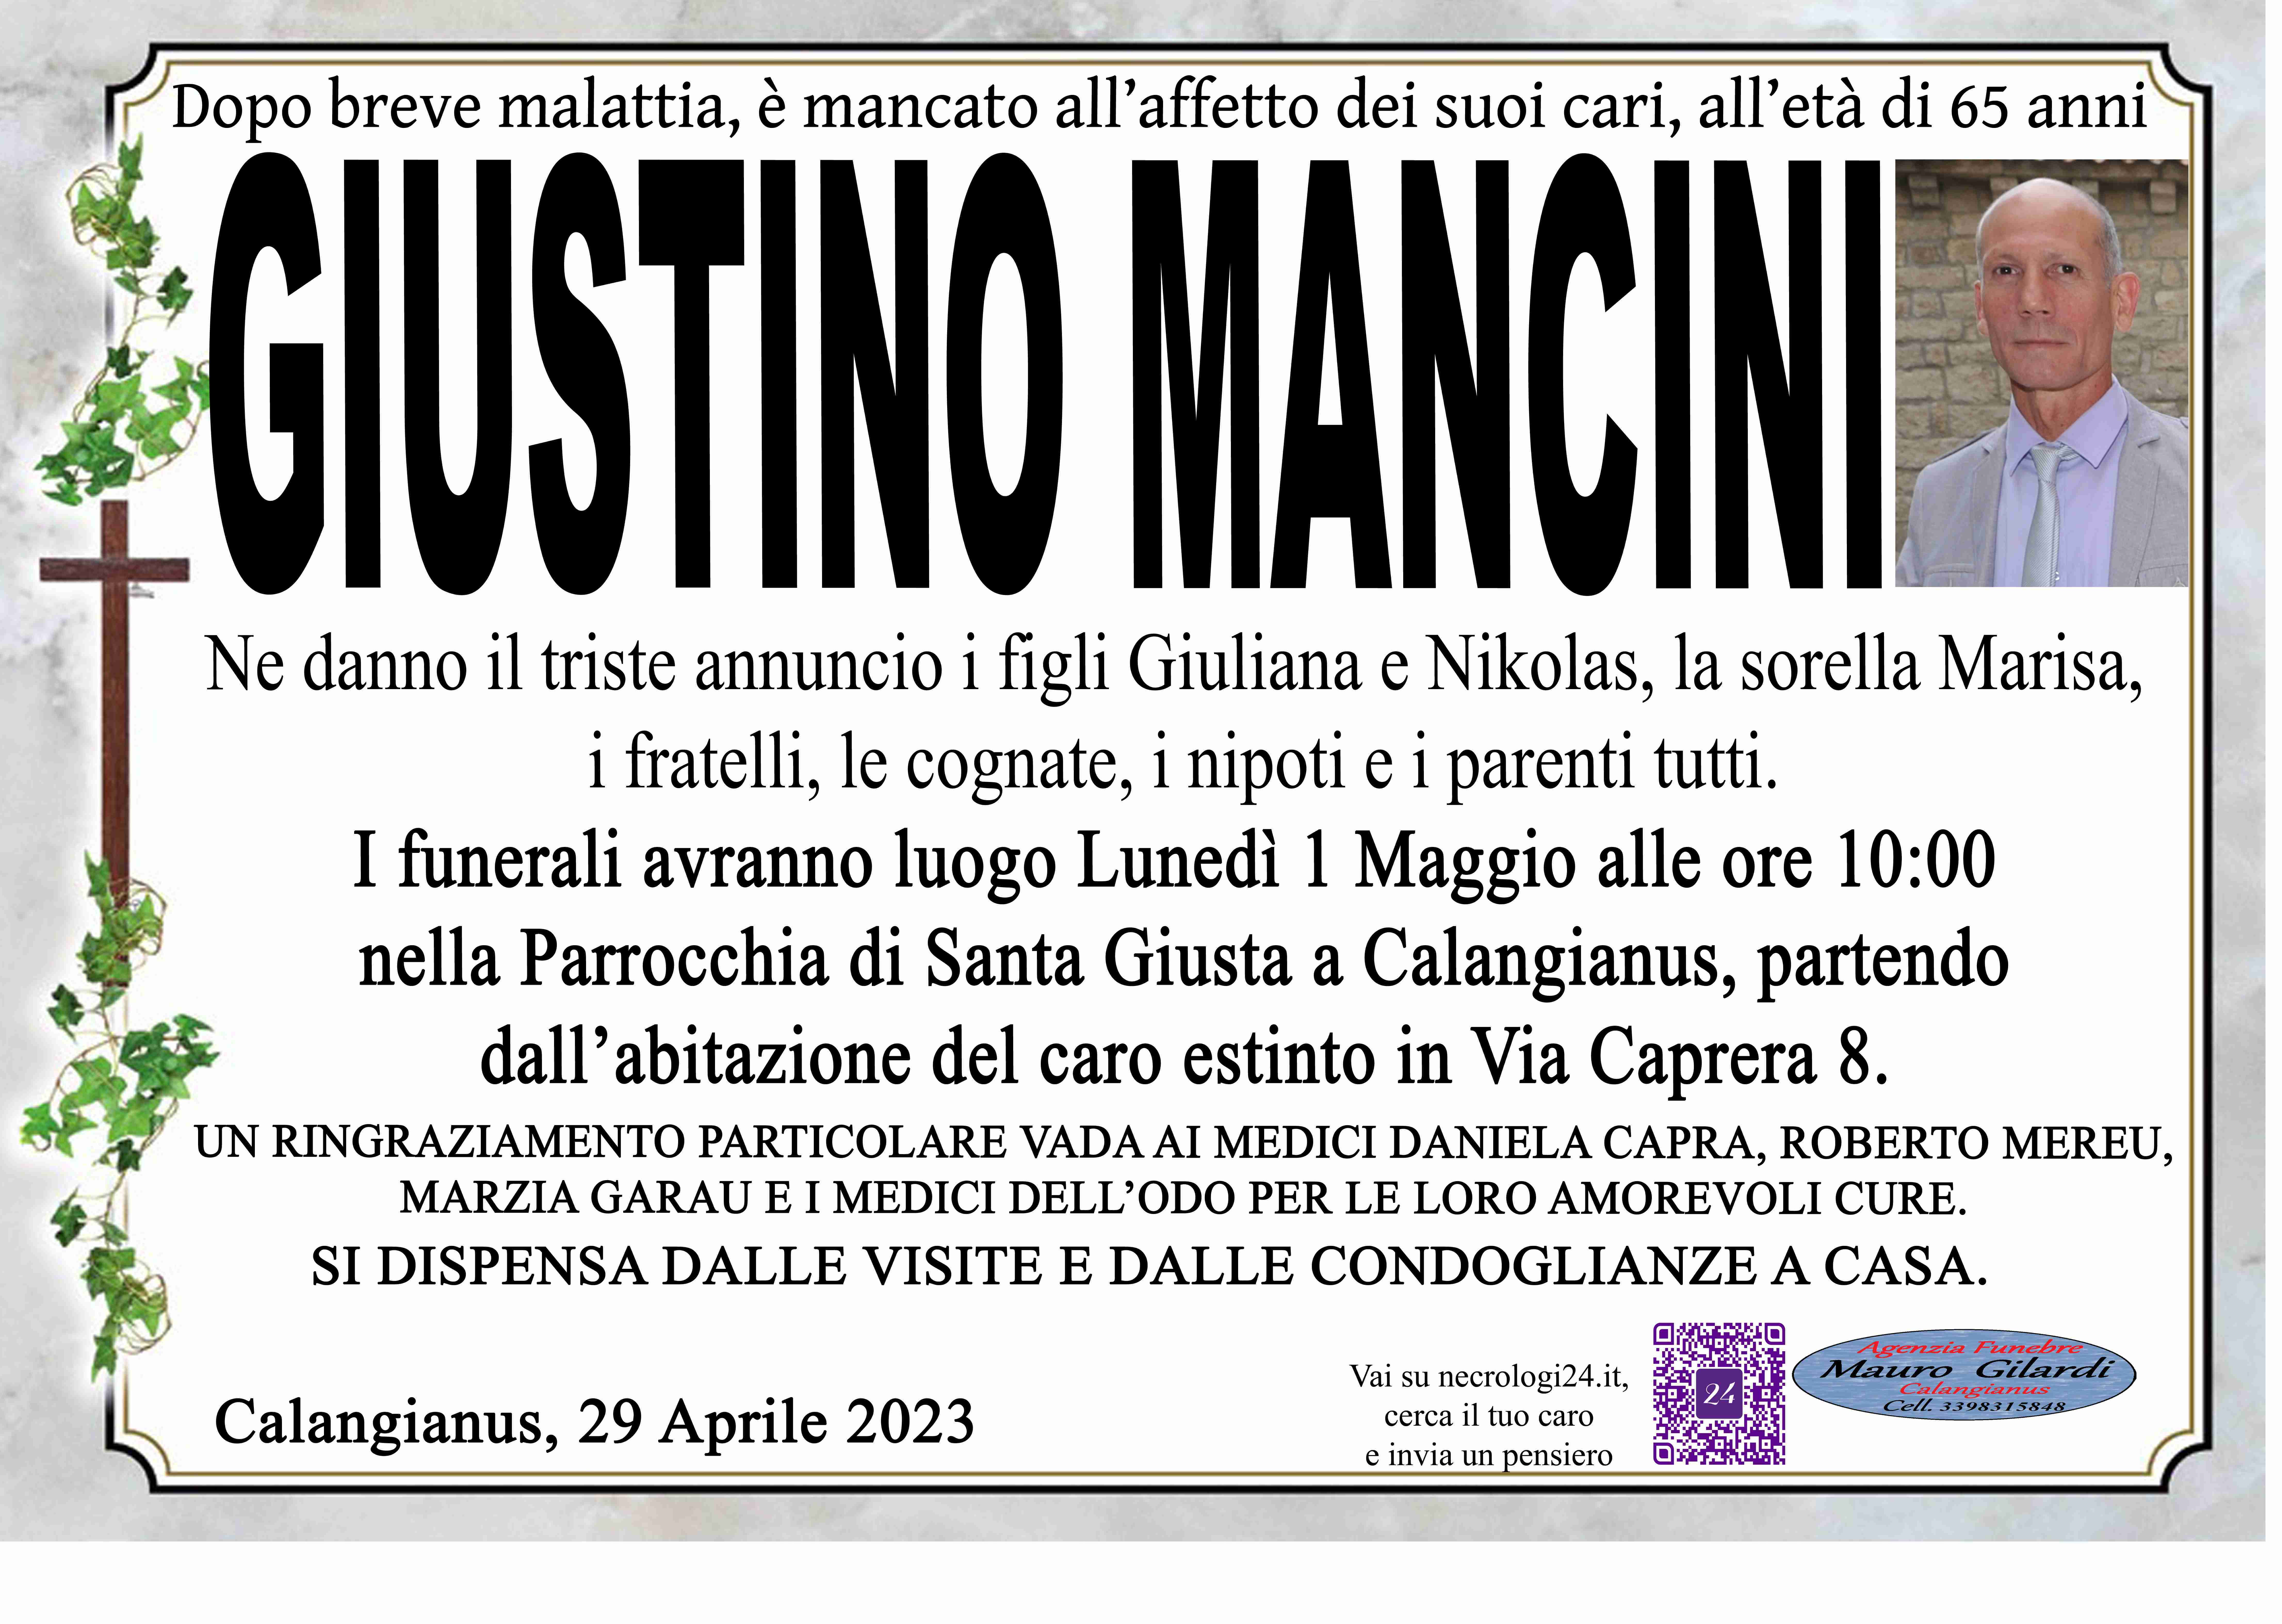 Giustino Mancini